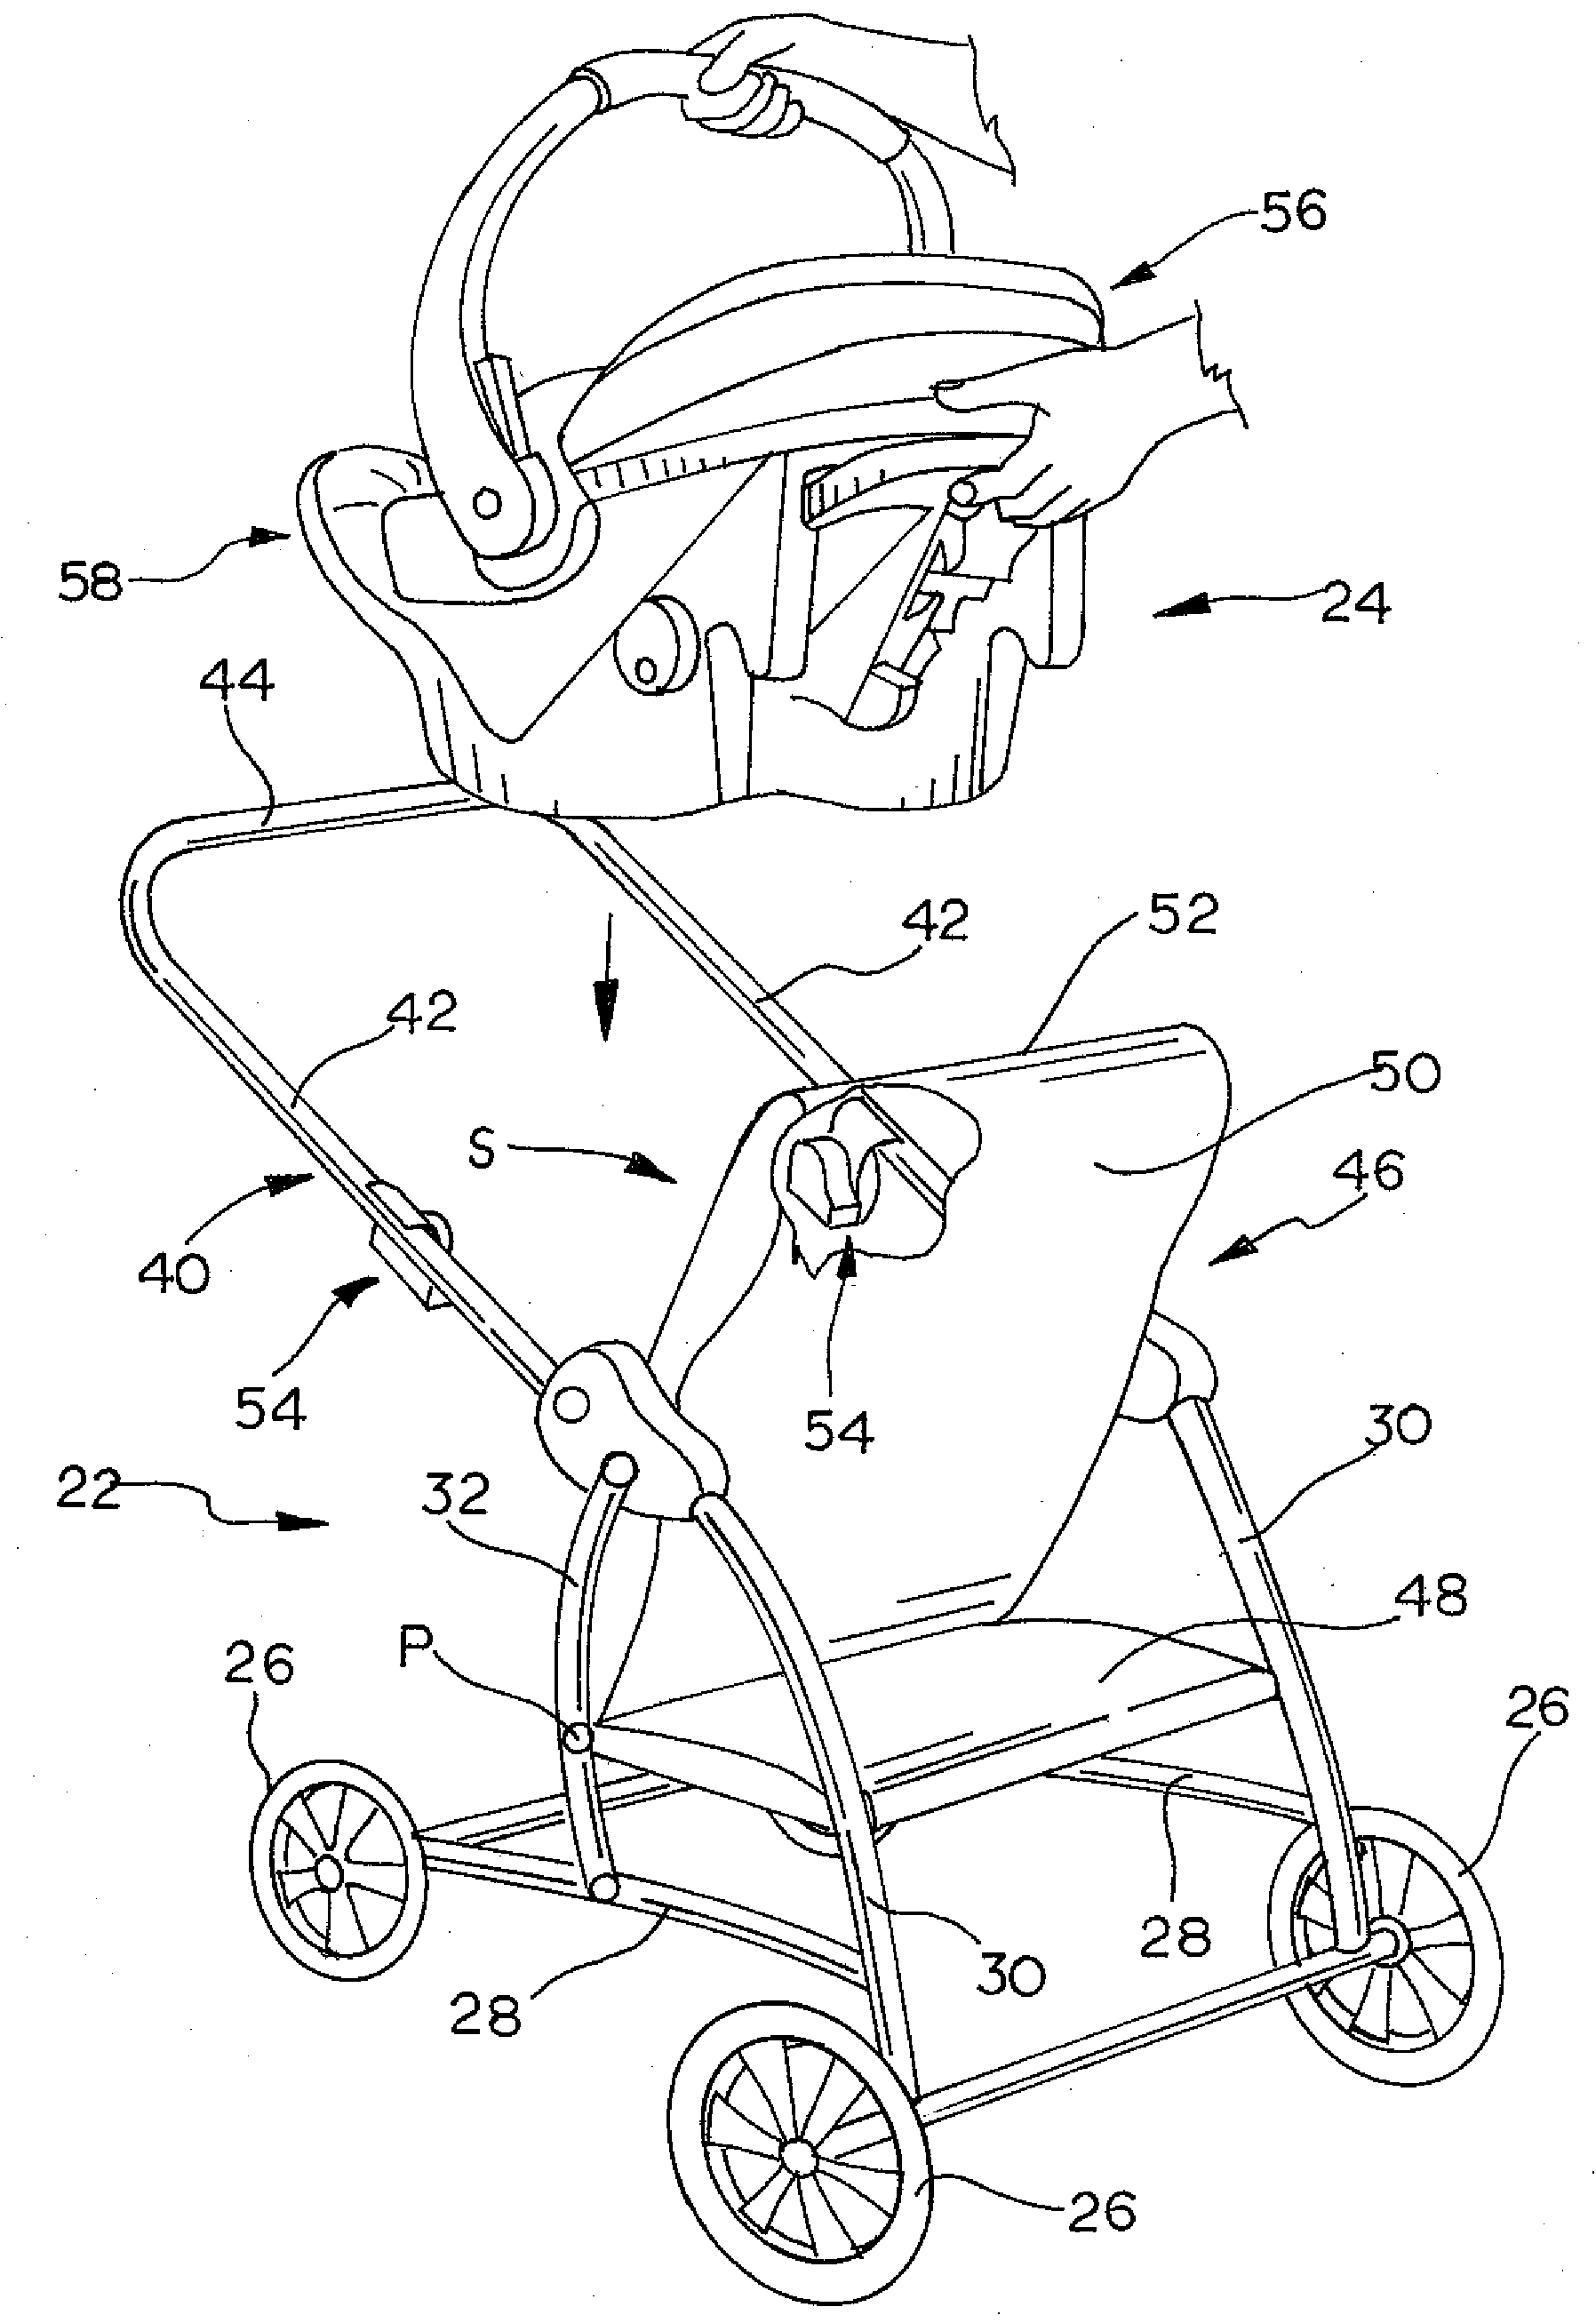 Stroller and Infant Carrier System